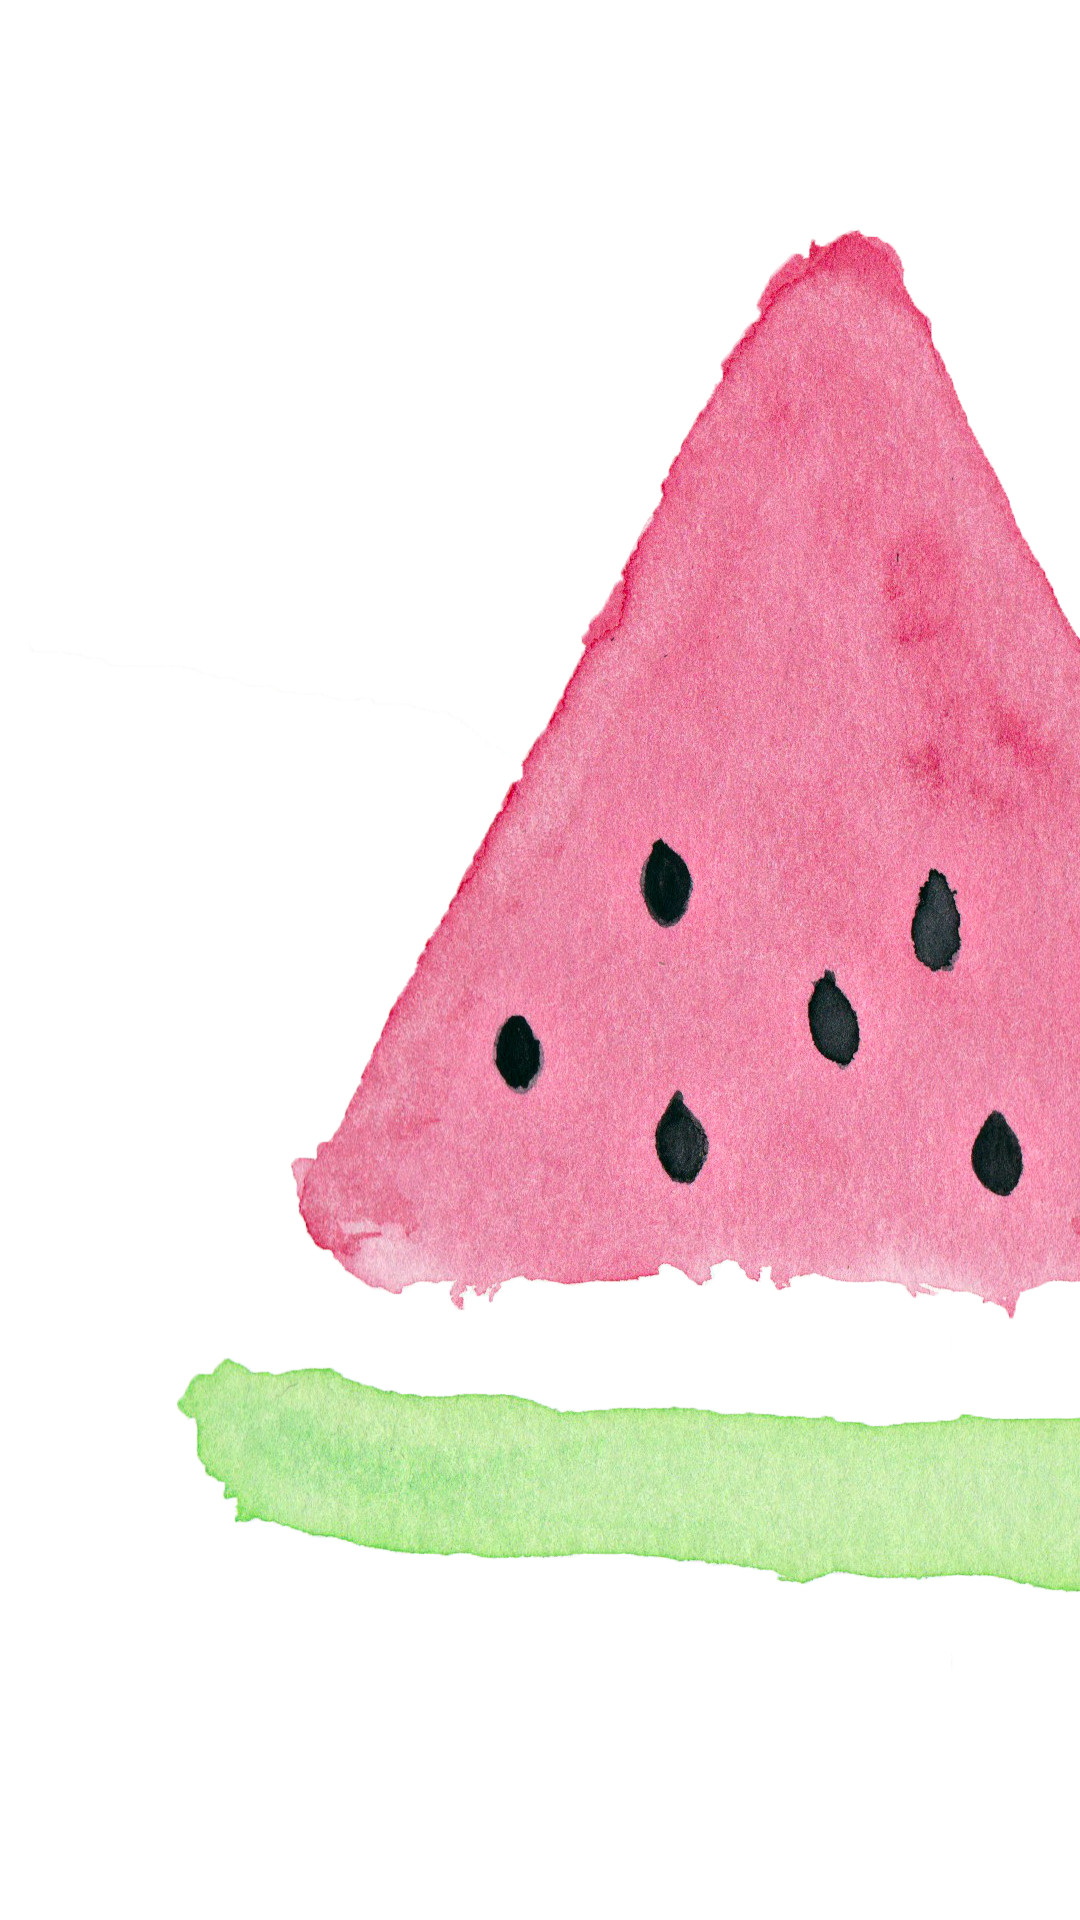 Wallpaper ID 392139  Food Watermelon Phone Wallpaper Fruit 1080x1920  free download